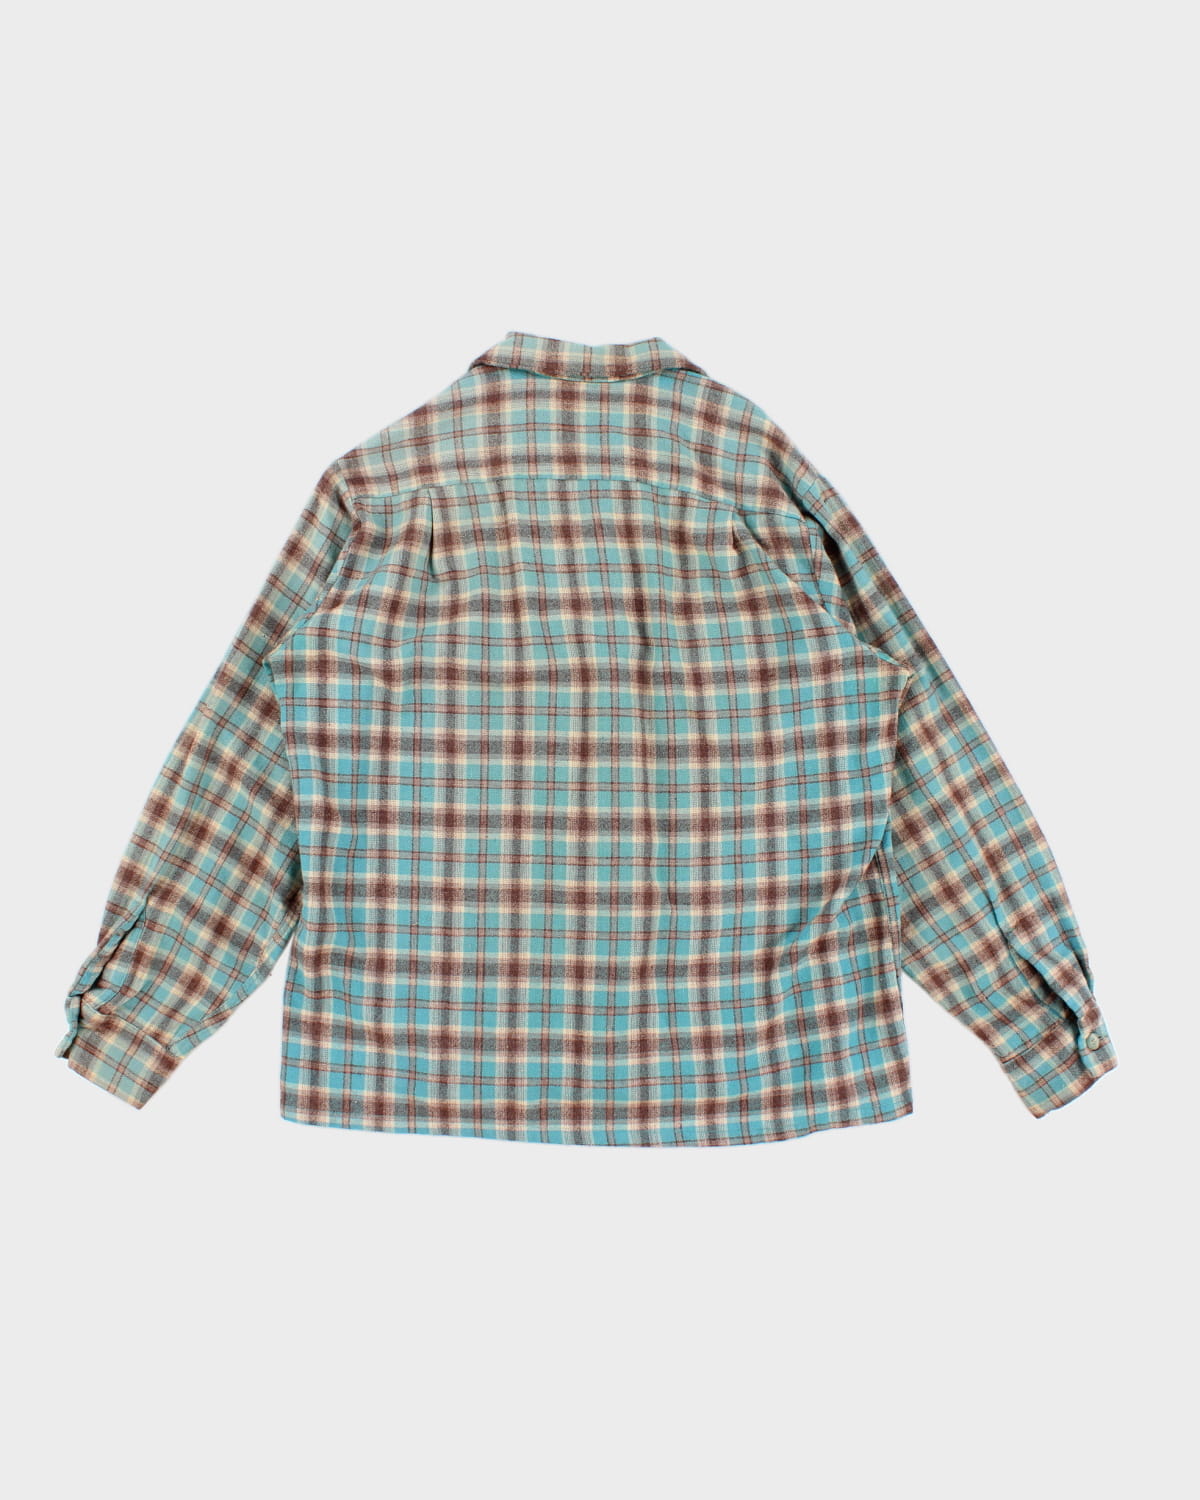 Vintage 50s Flannel Shirt - M